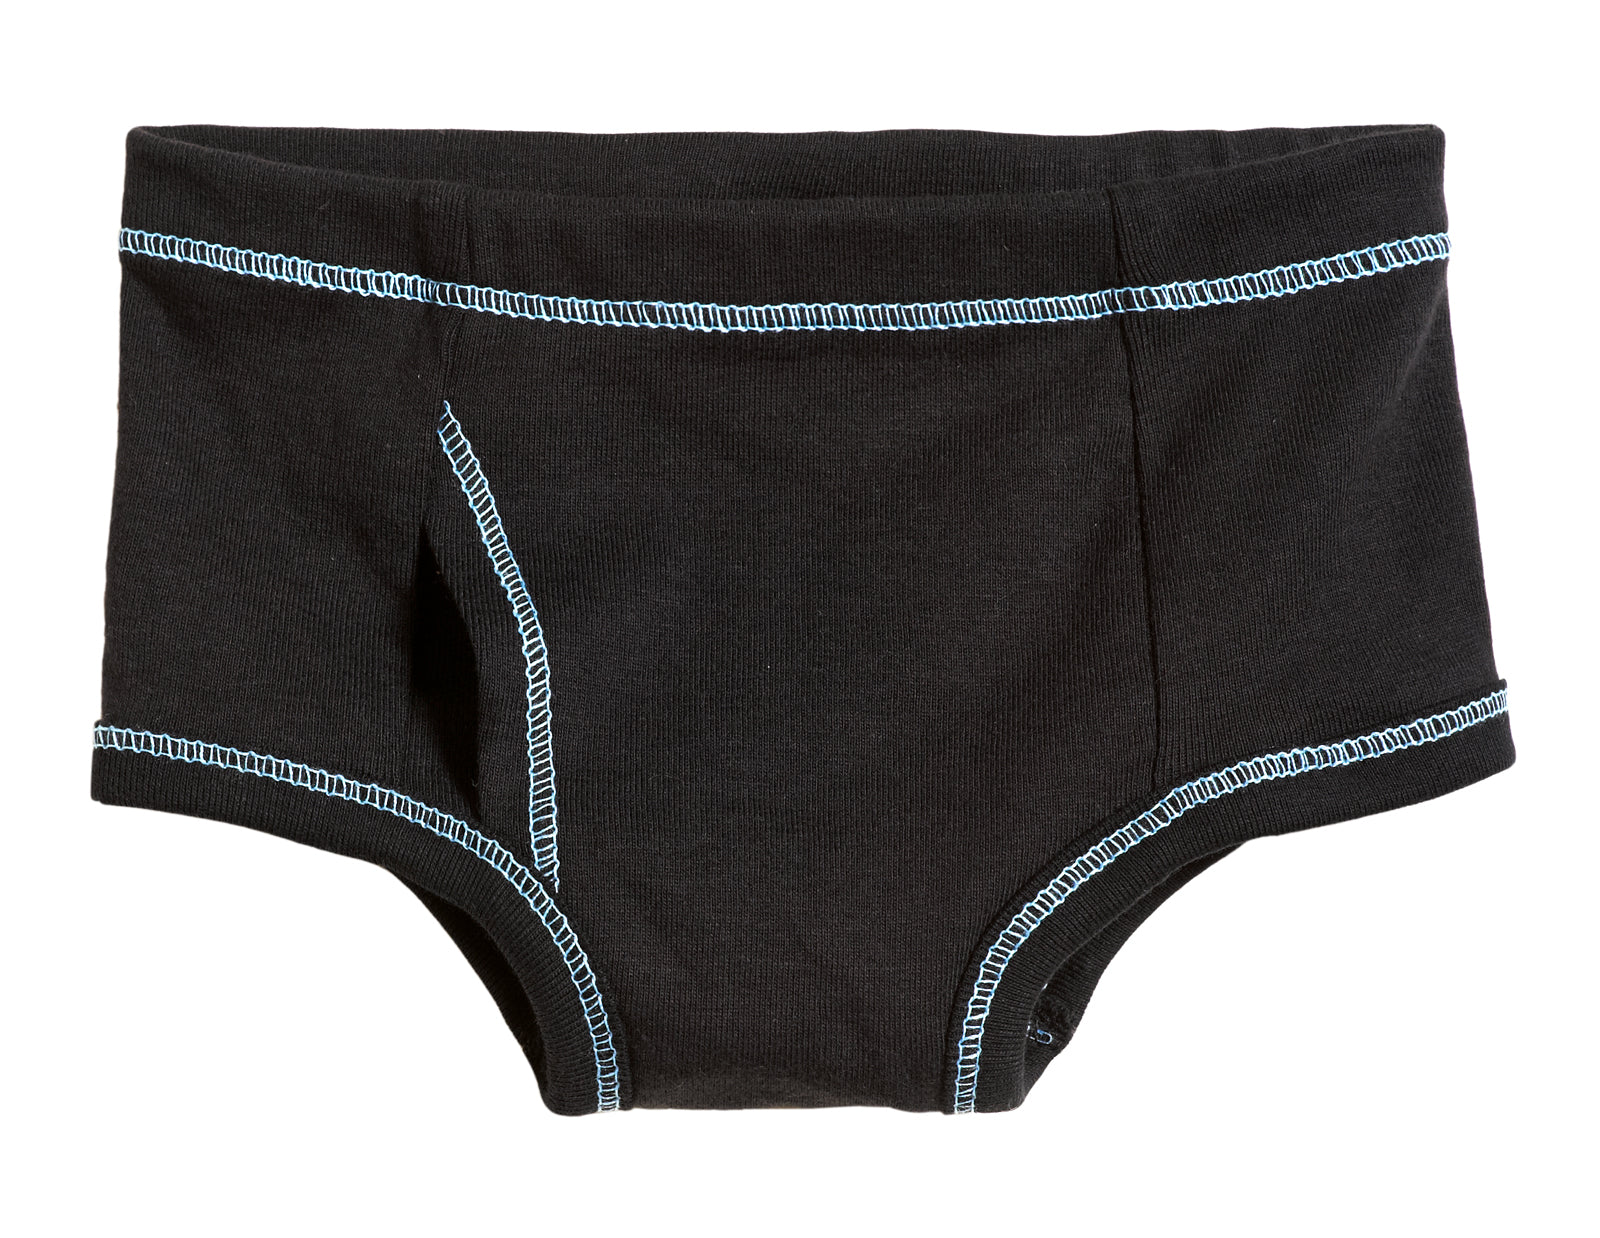 Soft elastic free cotton underwear for men For Comfort 